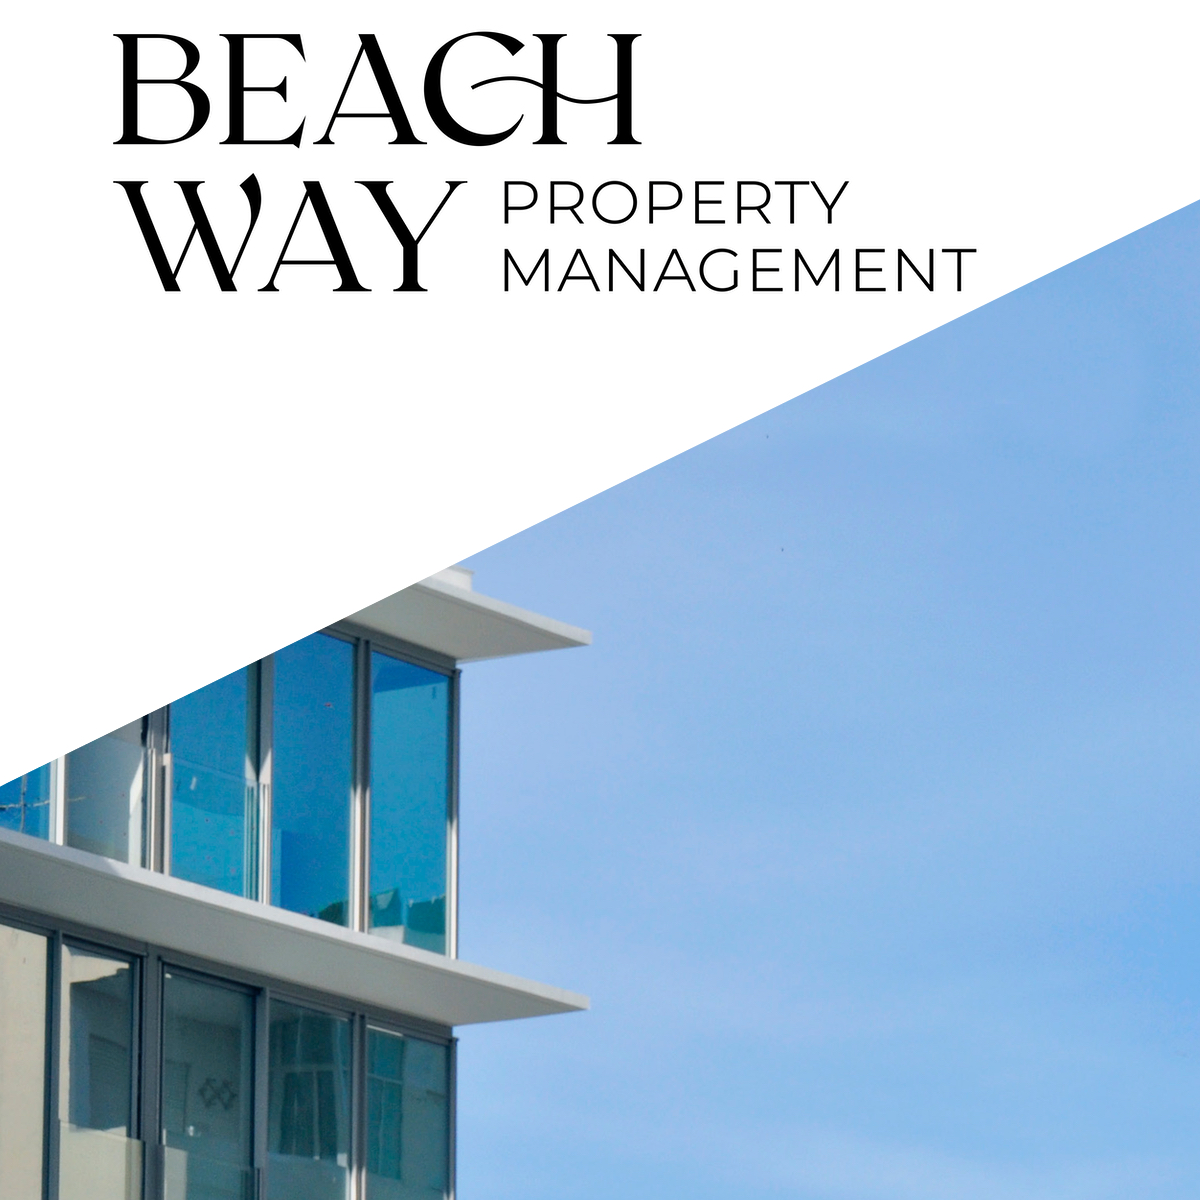 Beach Way Property Management